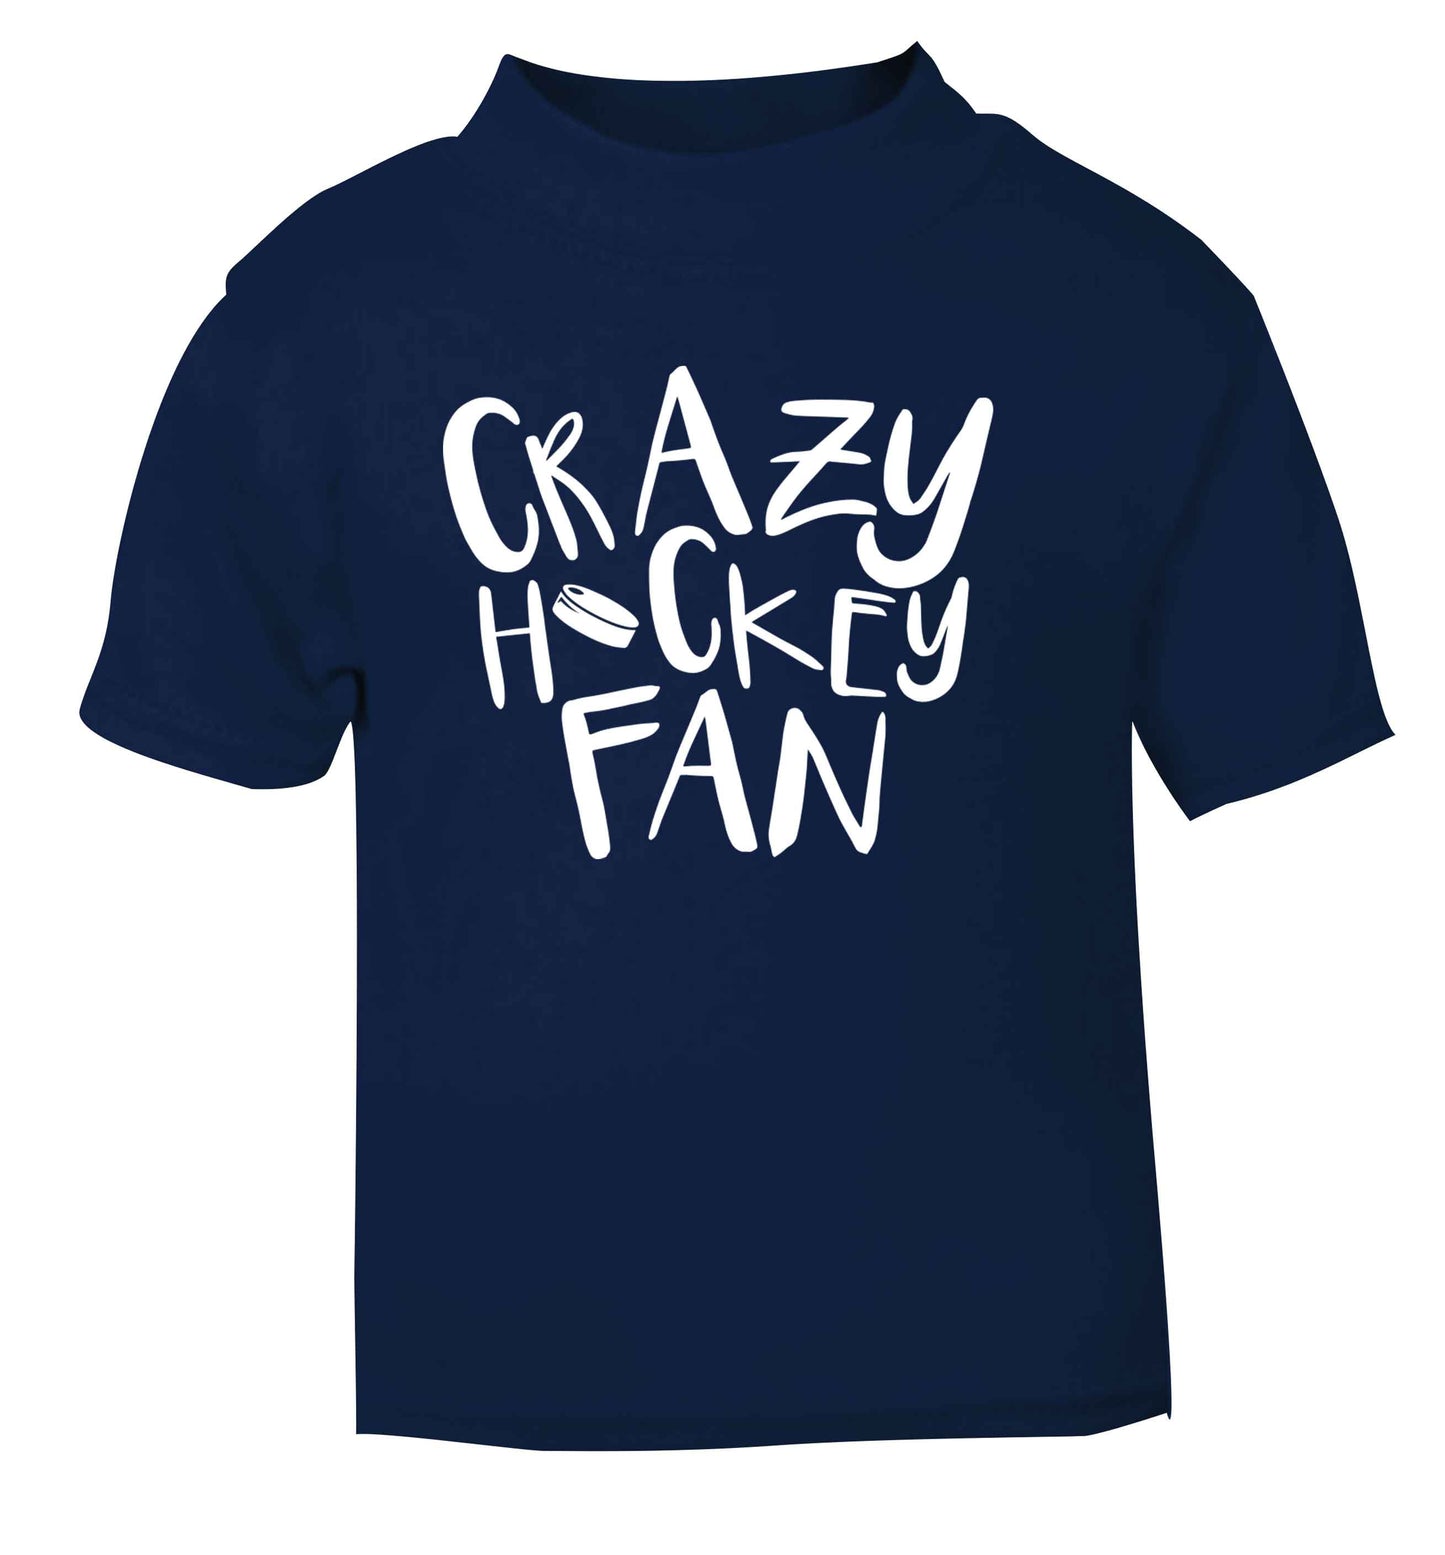 Crazy hockey fan navy Baby Toddler Tshirt 2 Years